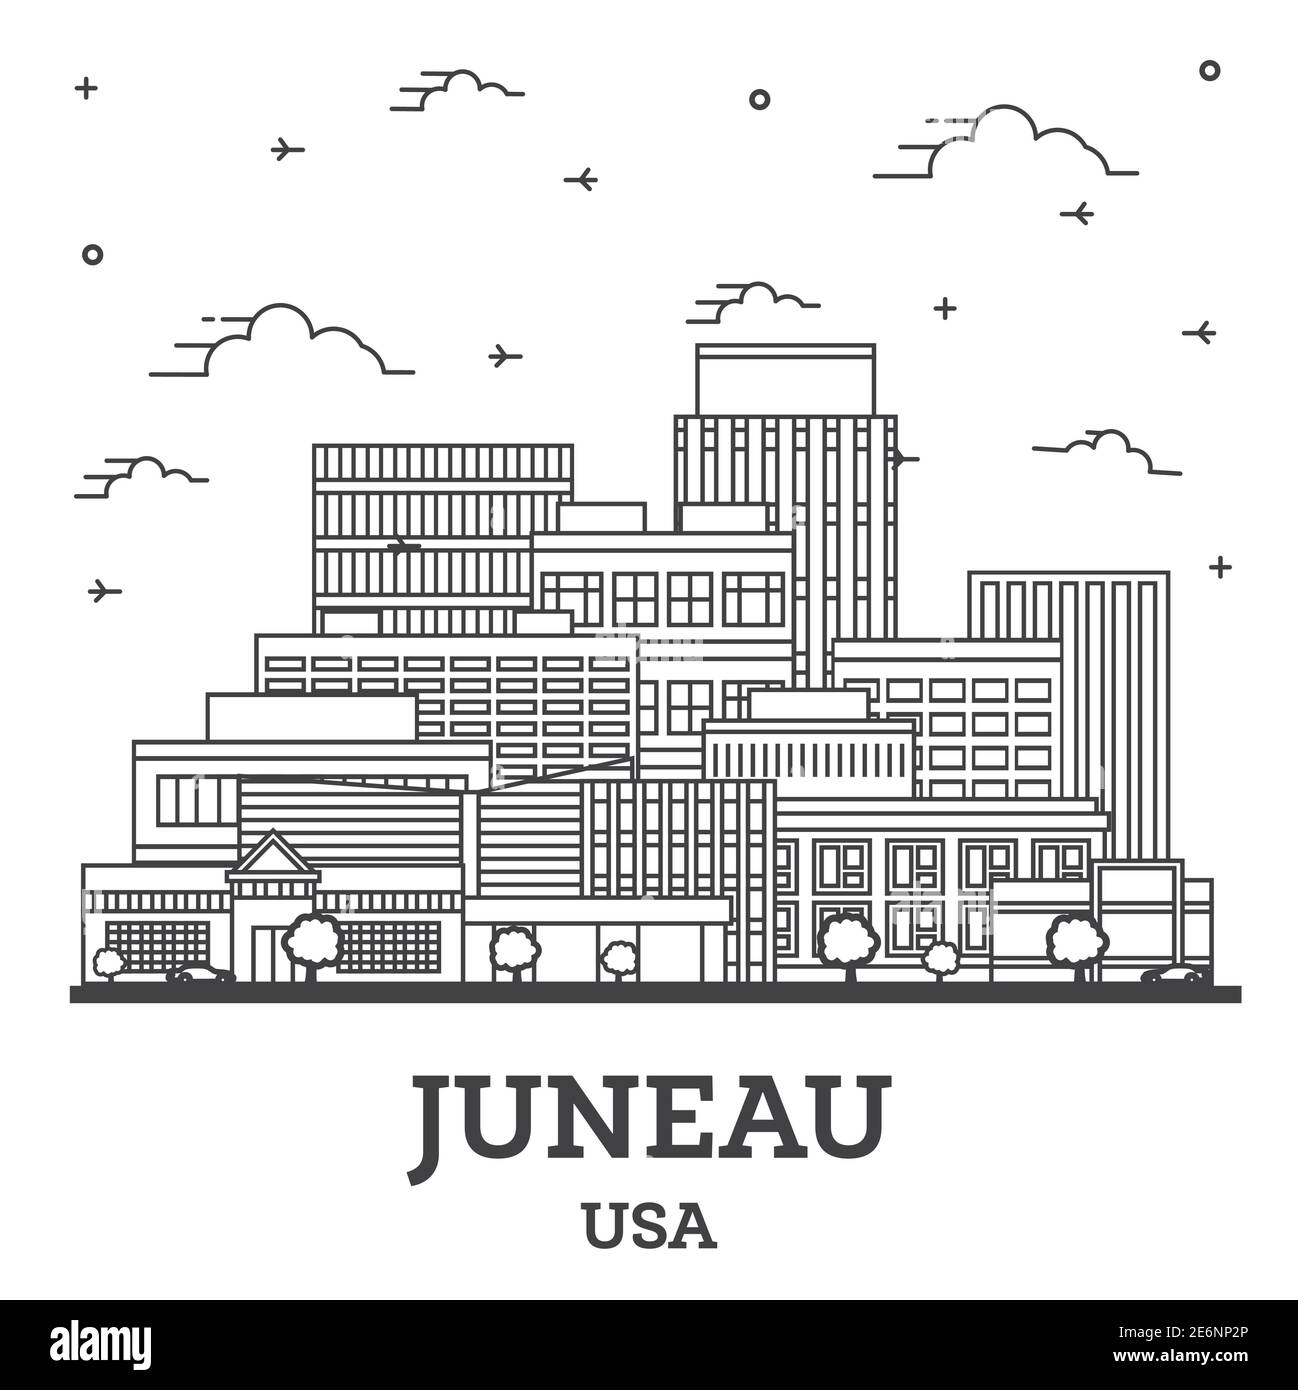 Outline Juneau Alaska USA City Skyline with Modern Buildings Isolated on White. Vector Illustration. Juneau USA Cityscape with Landmarks. Stock Vector